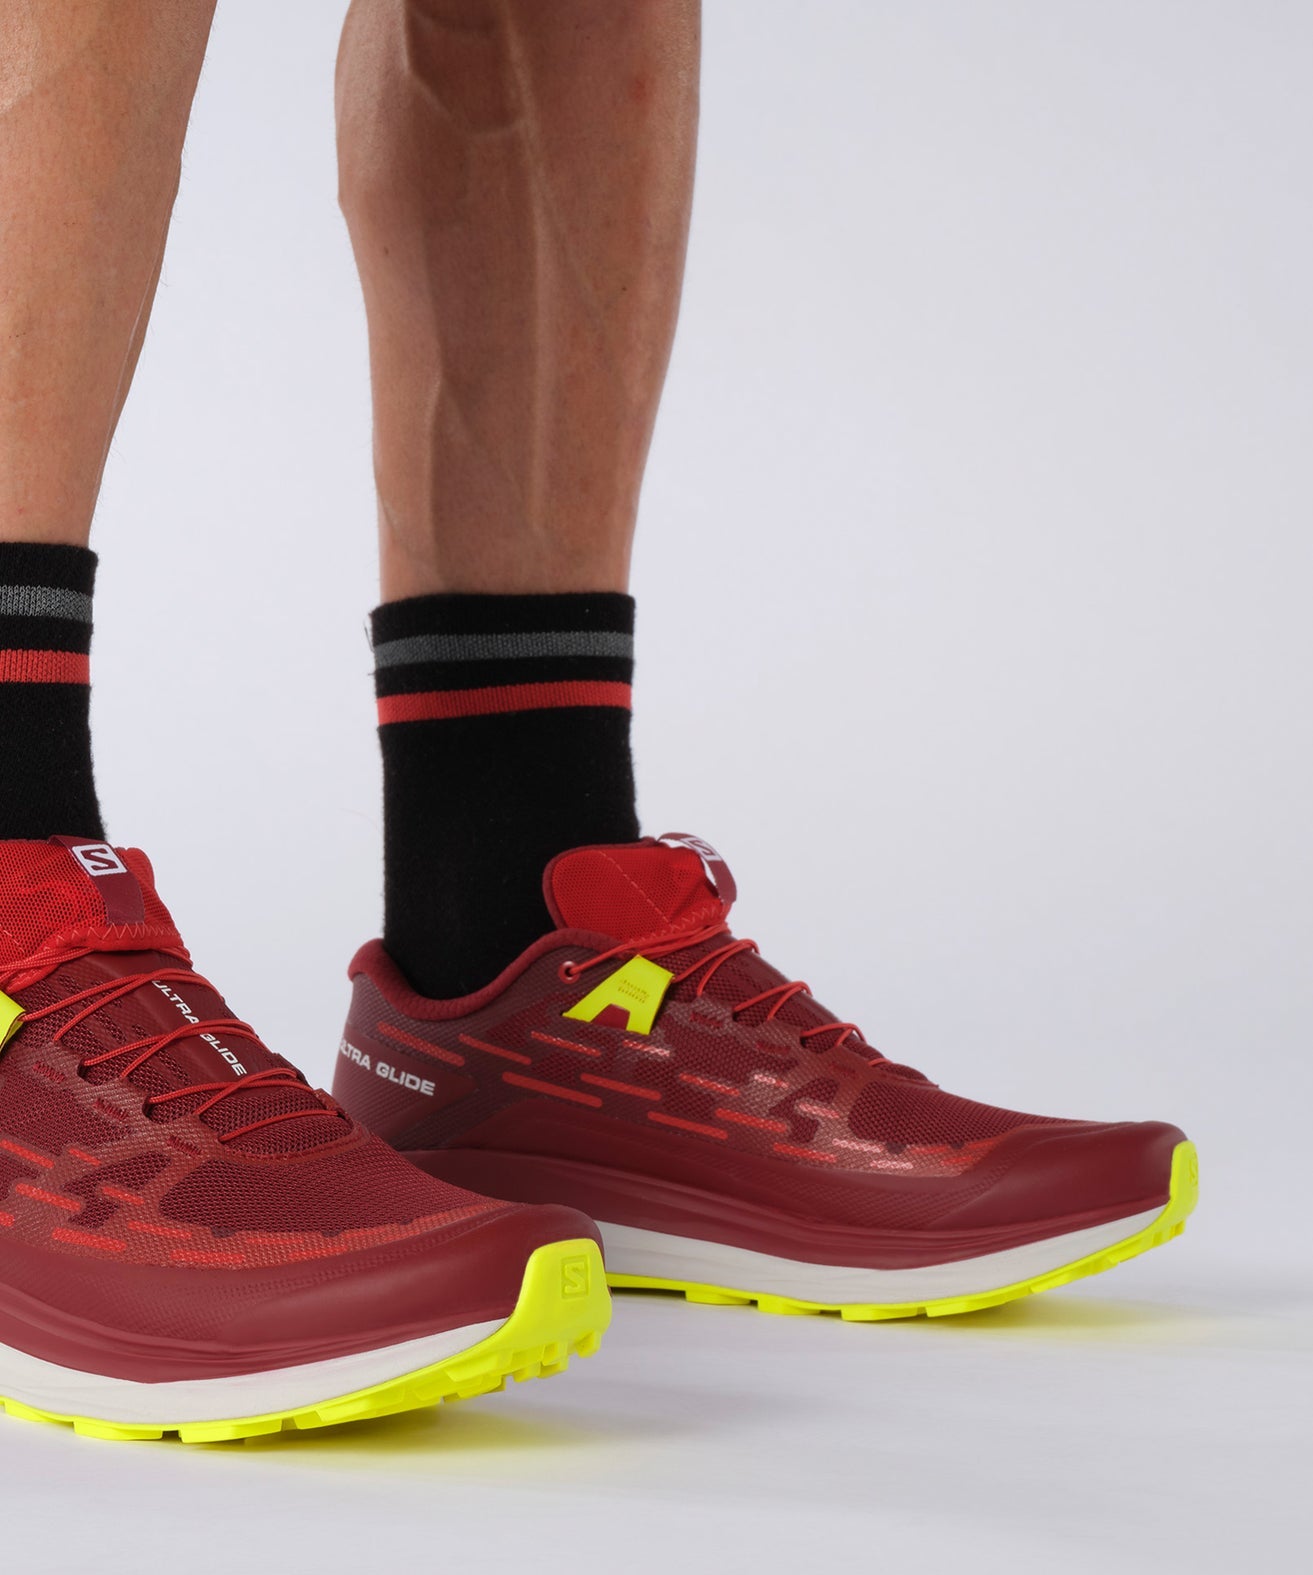 Salomon Men's Outdoor & Sports Running Shoes, Red